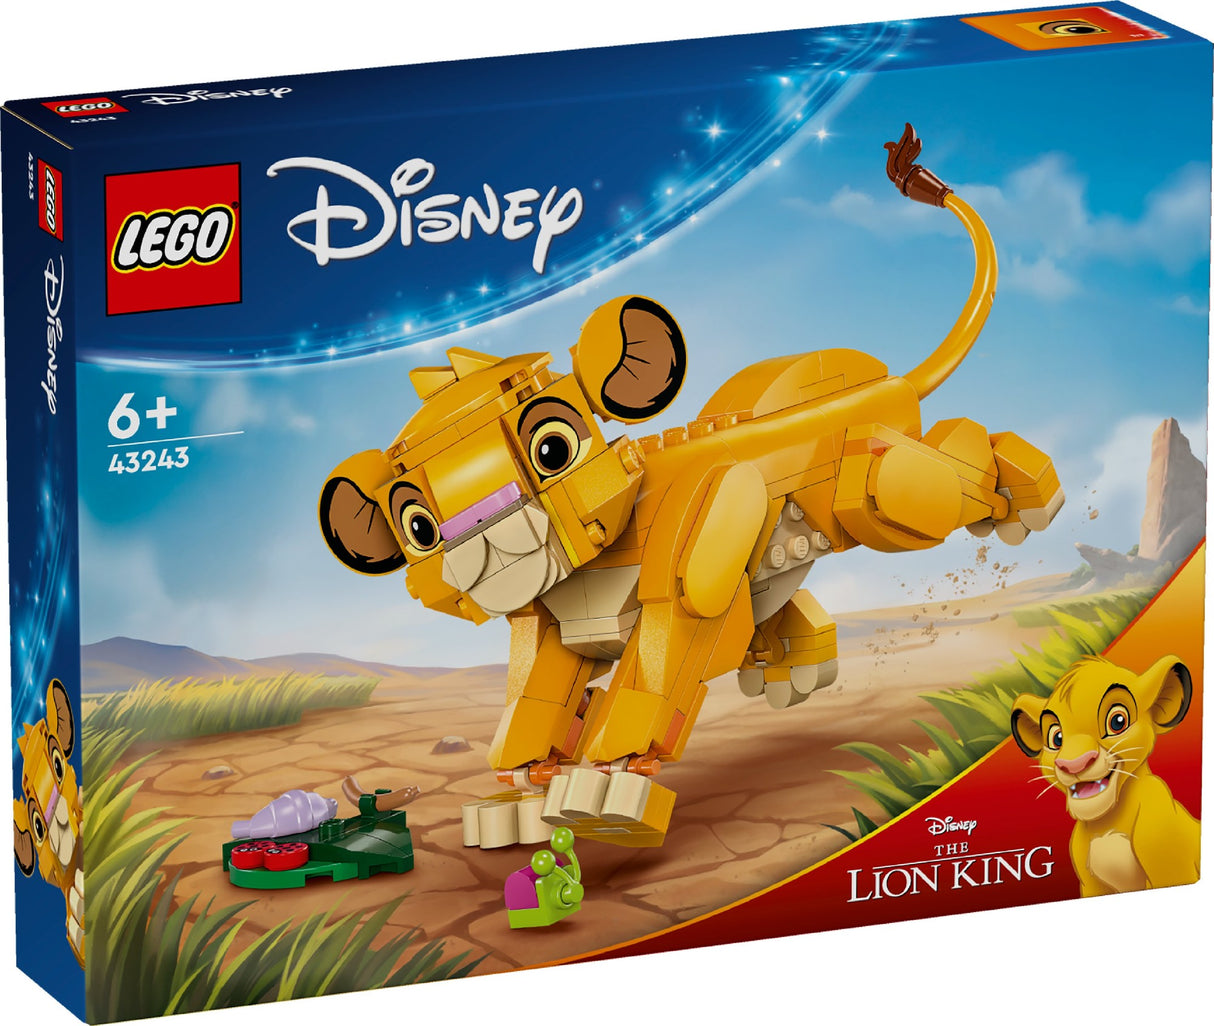 LEGO DISNEY SIMBA THE LION KING CUB 43243 AGE: 6+